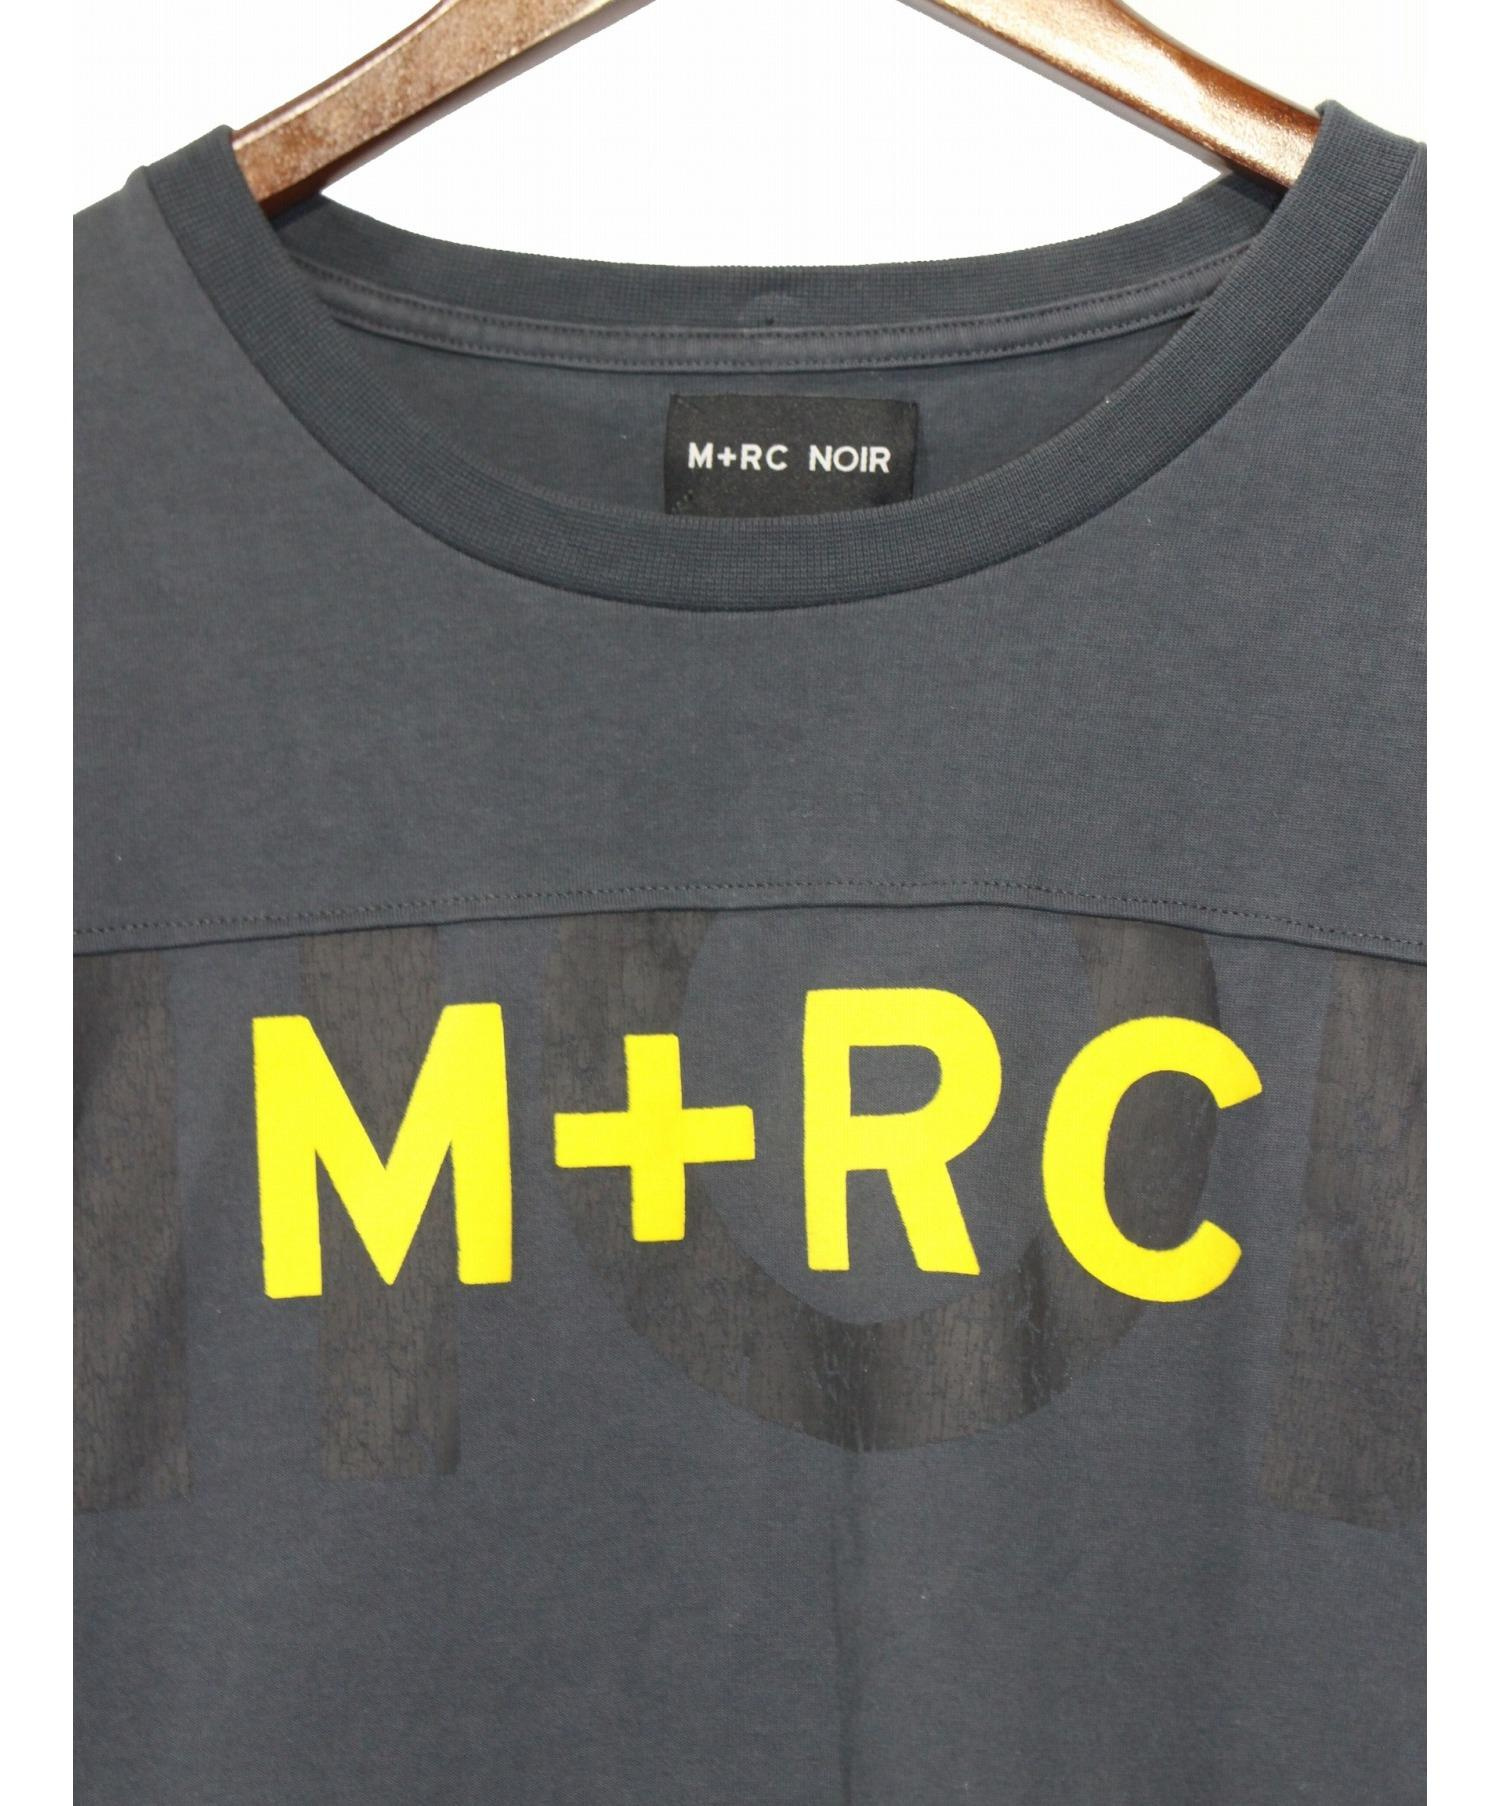 M+RC NOIR (マルシェノア) ロゴTシャツ サイズ:XL｜ブランド古着の通販 